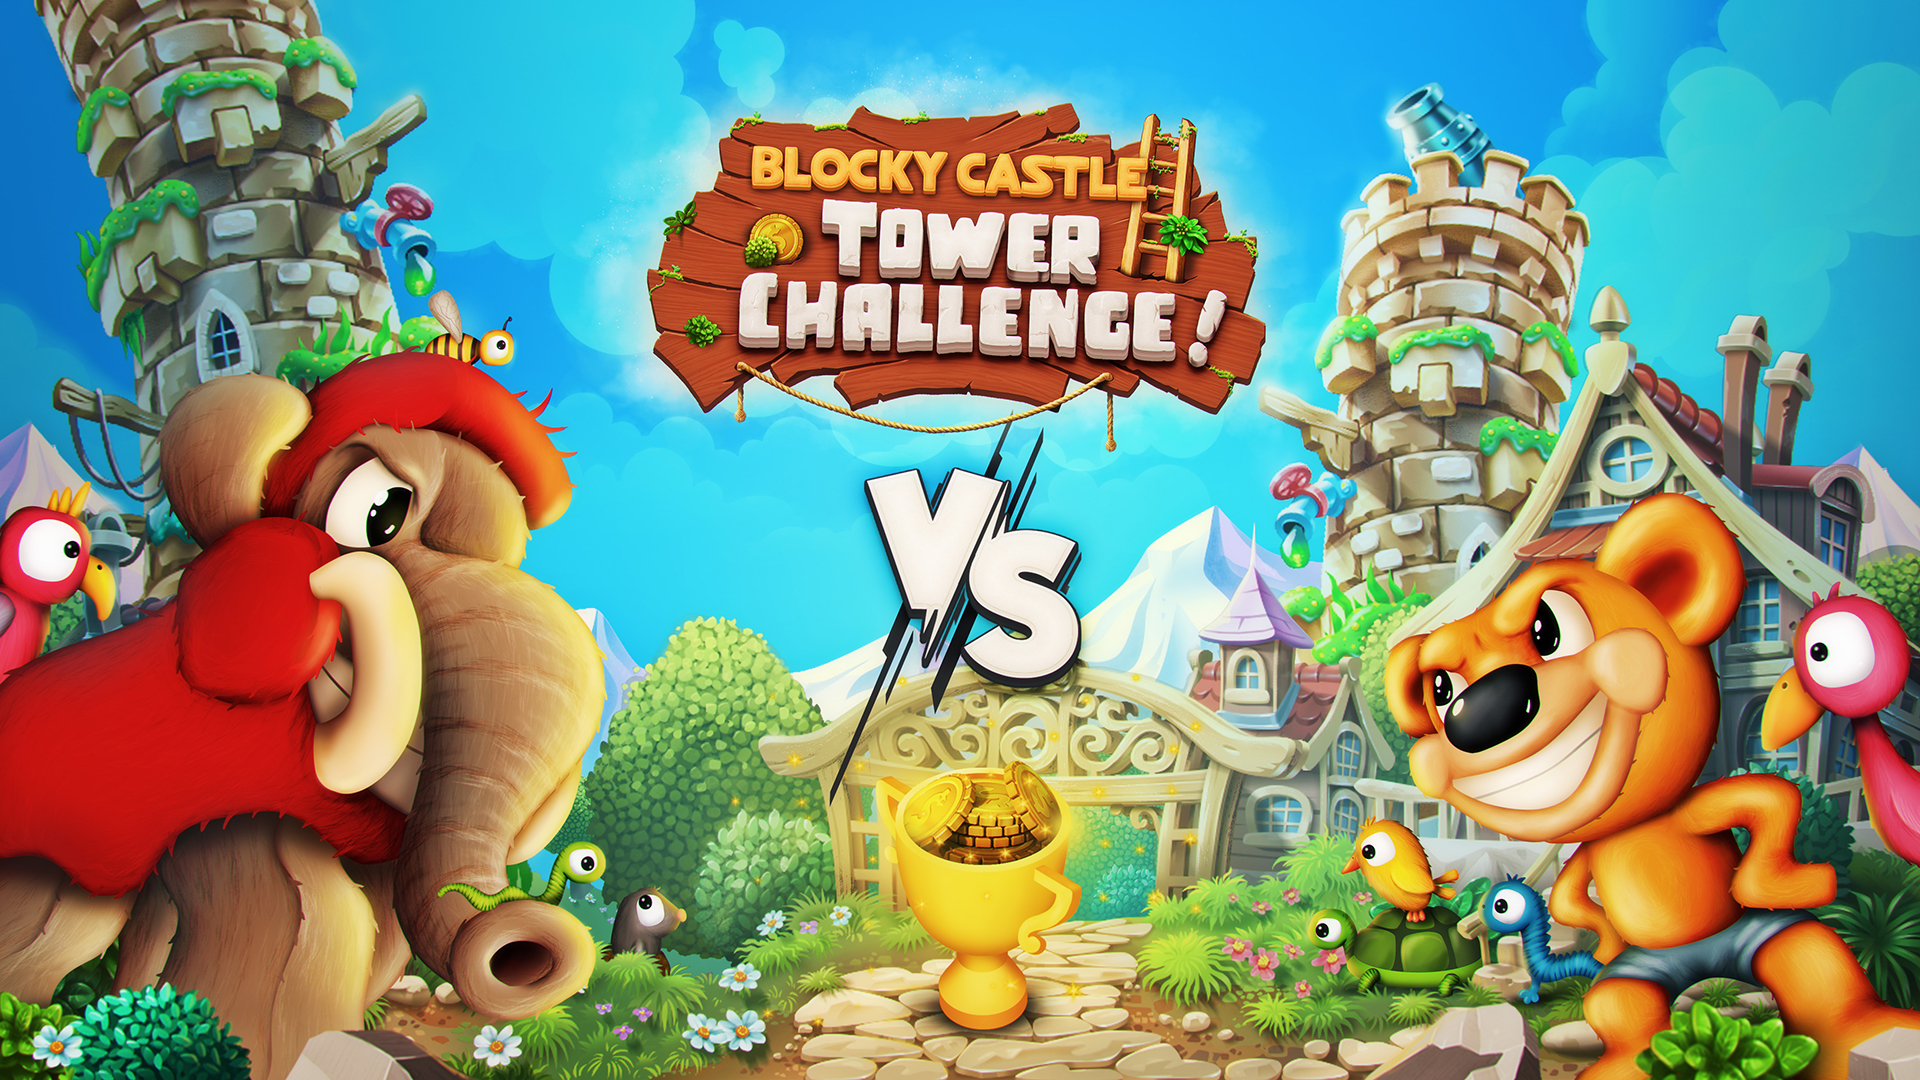 Descargar Blocky Castle: Tower Challenge gratis para Android.